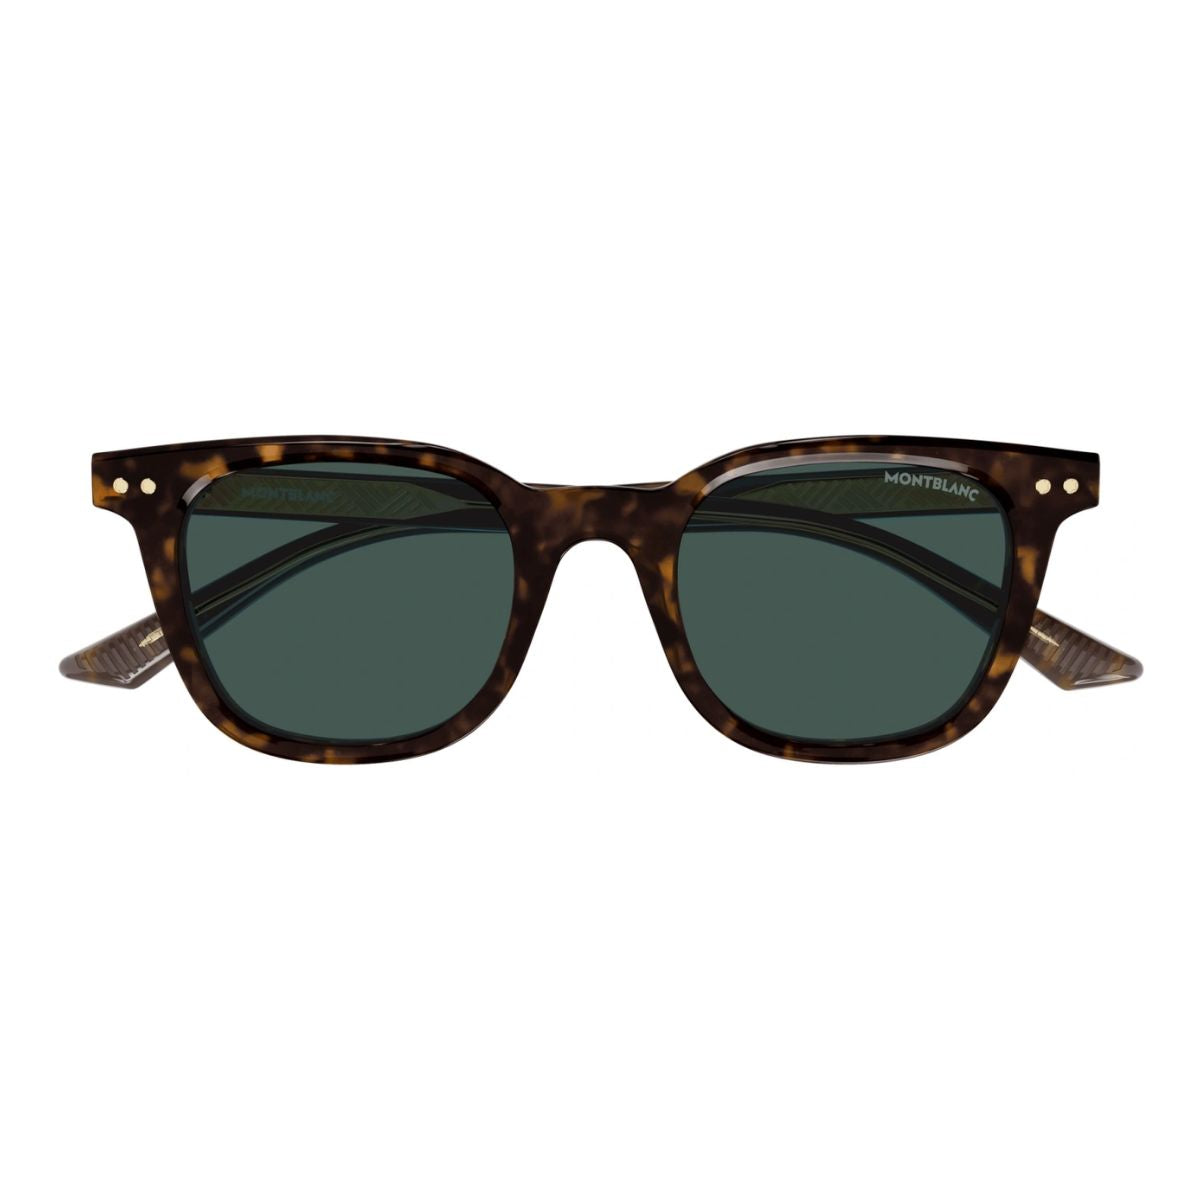 "Shop Latest Mont Blanc Havana Square Sunglasses For Mens At Optorium"